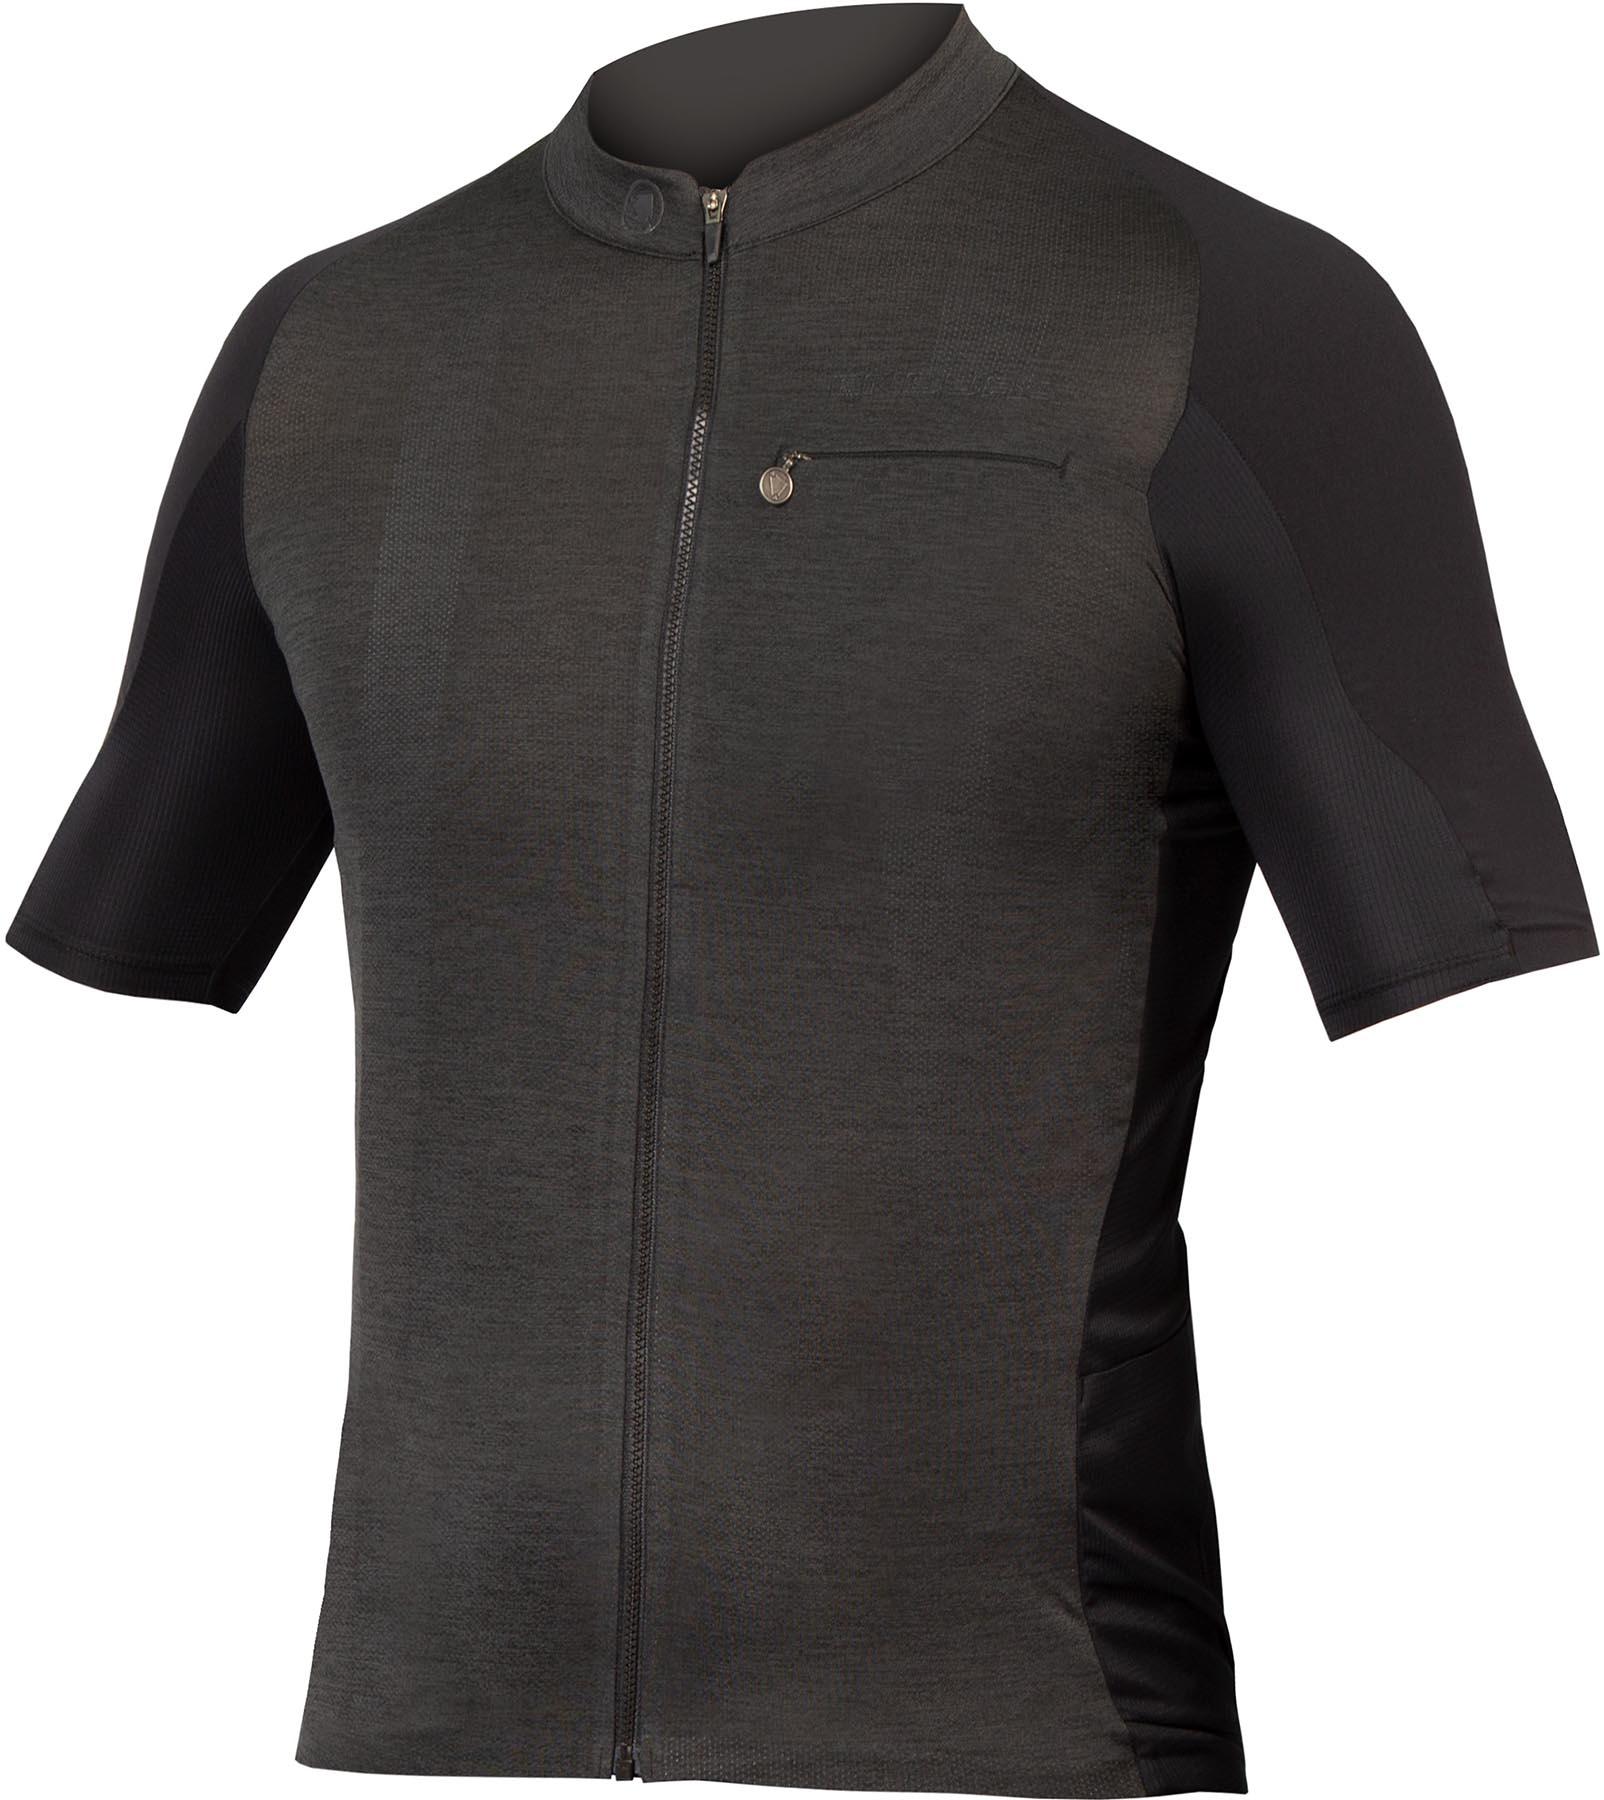 Endura Gv500 Reiver Short Sleeve Cycling Jersey - Black